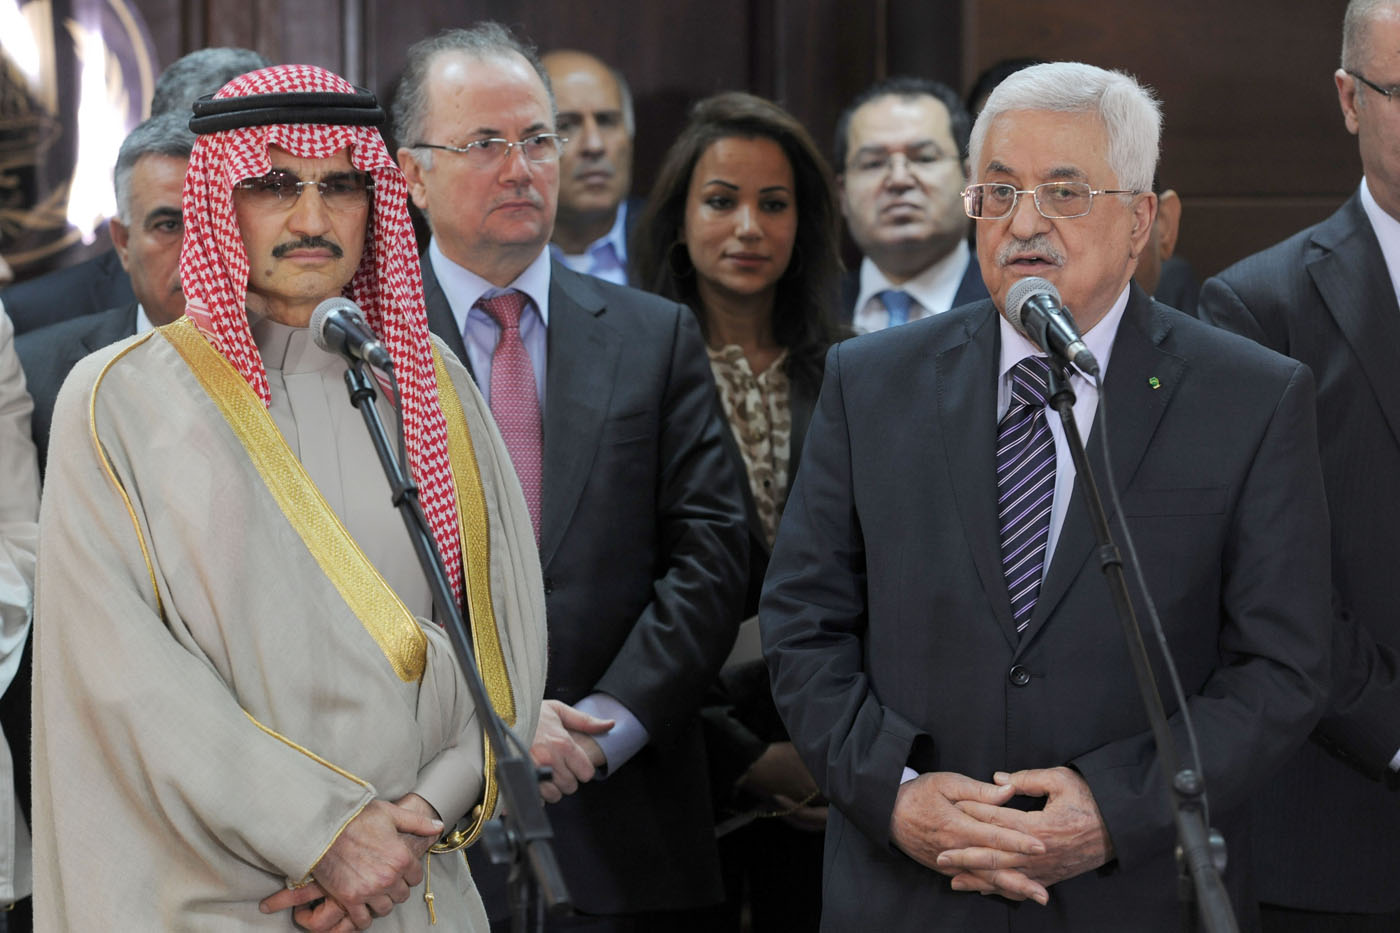 Palestinian President Mahmoud Abbas and Saudi Arabia's Prince Al-Waleed bin Talal